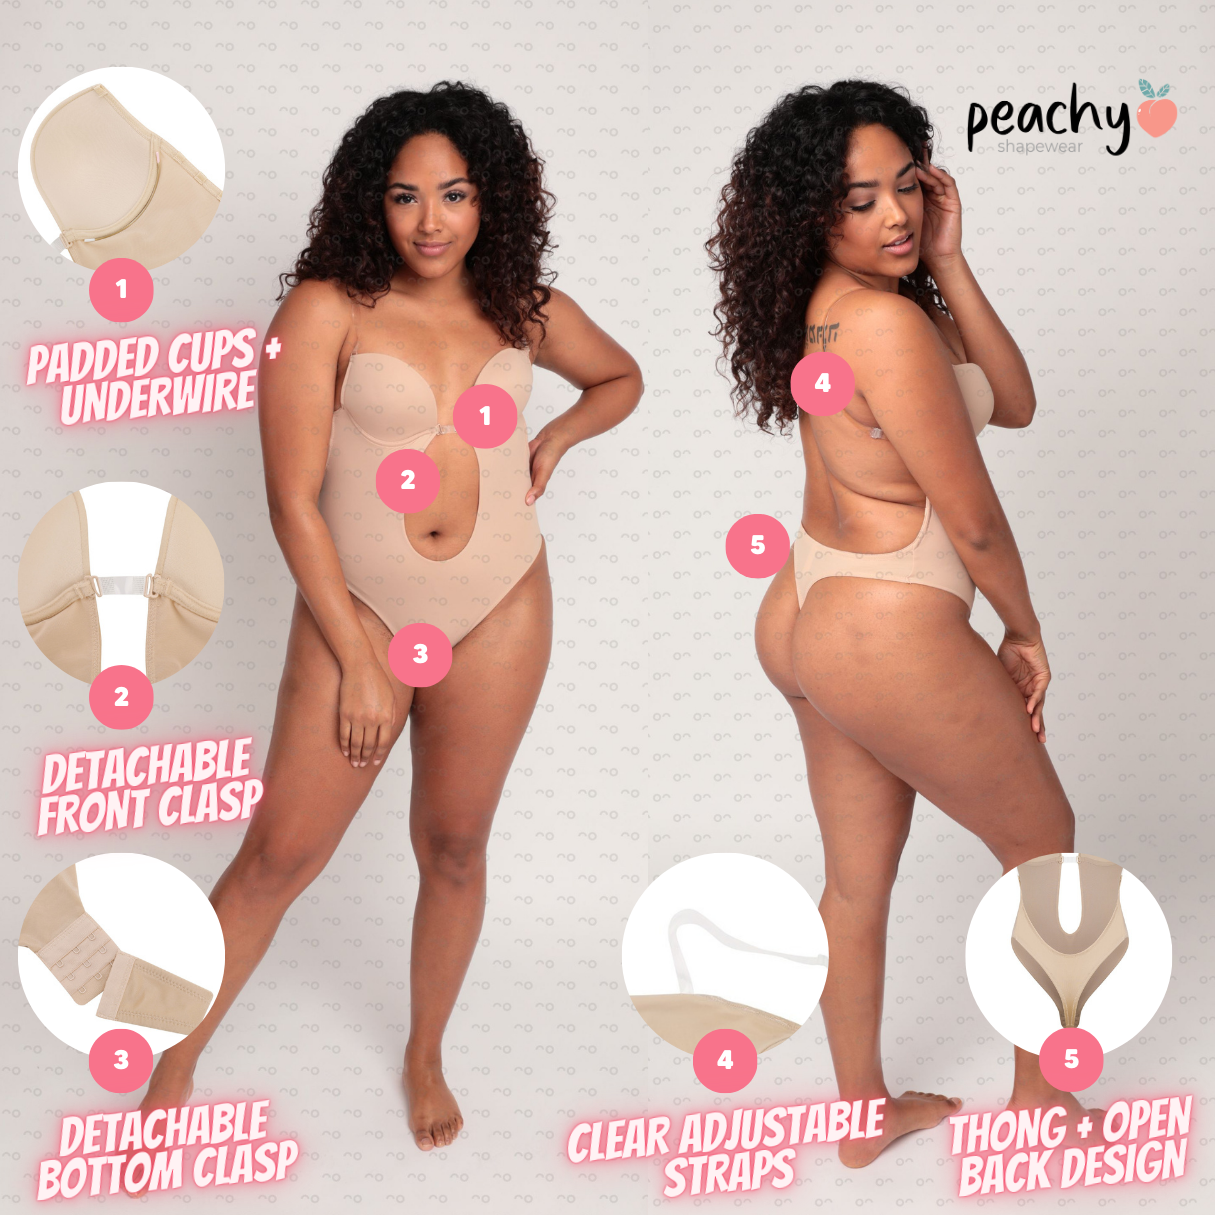 Peachy Shapewear - Backless Body Bra